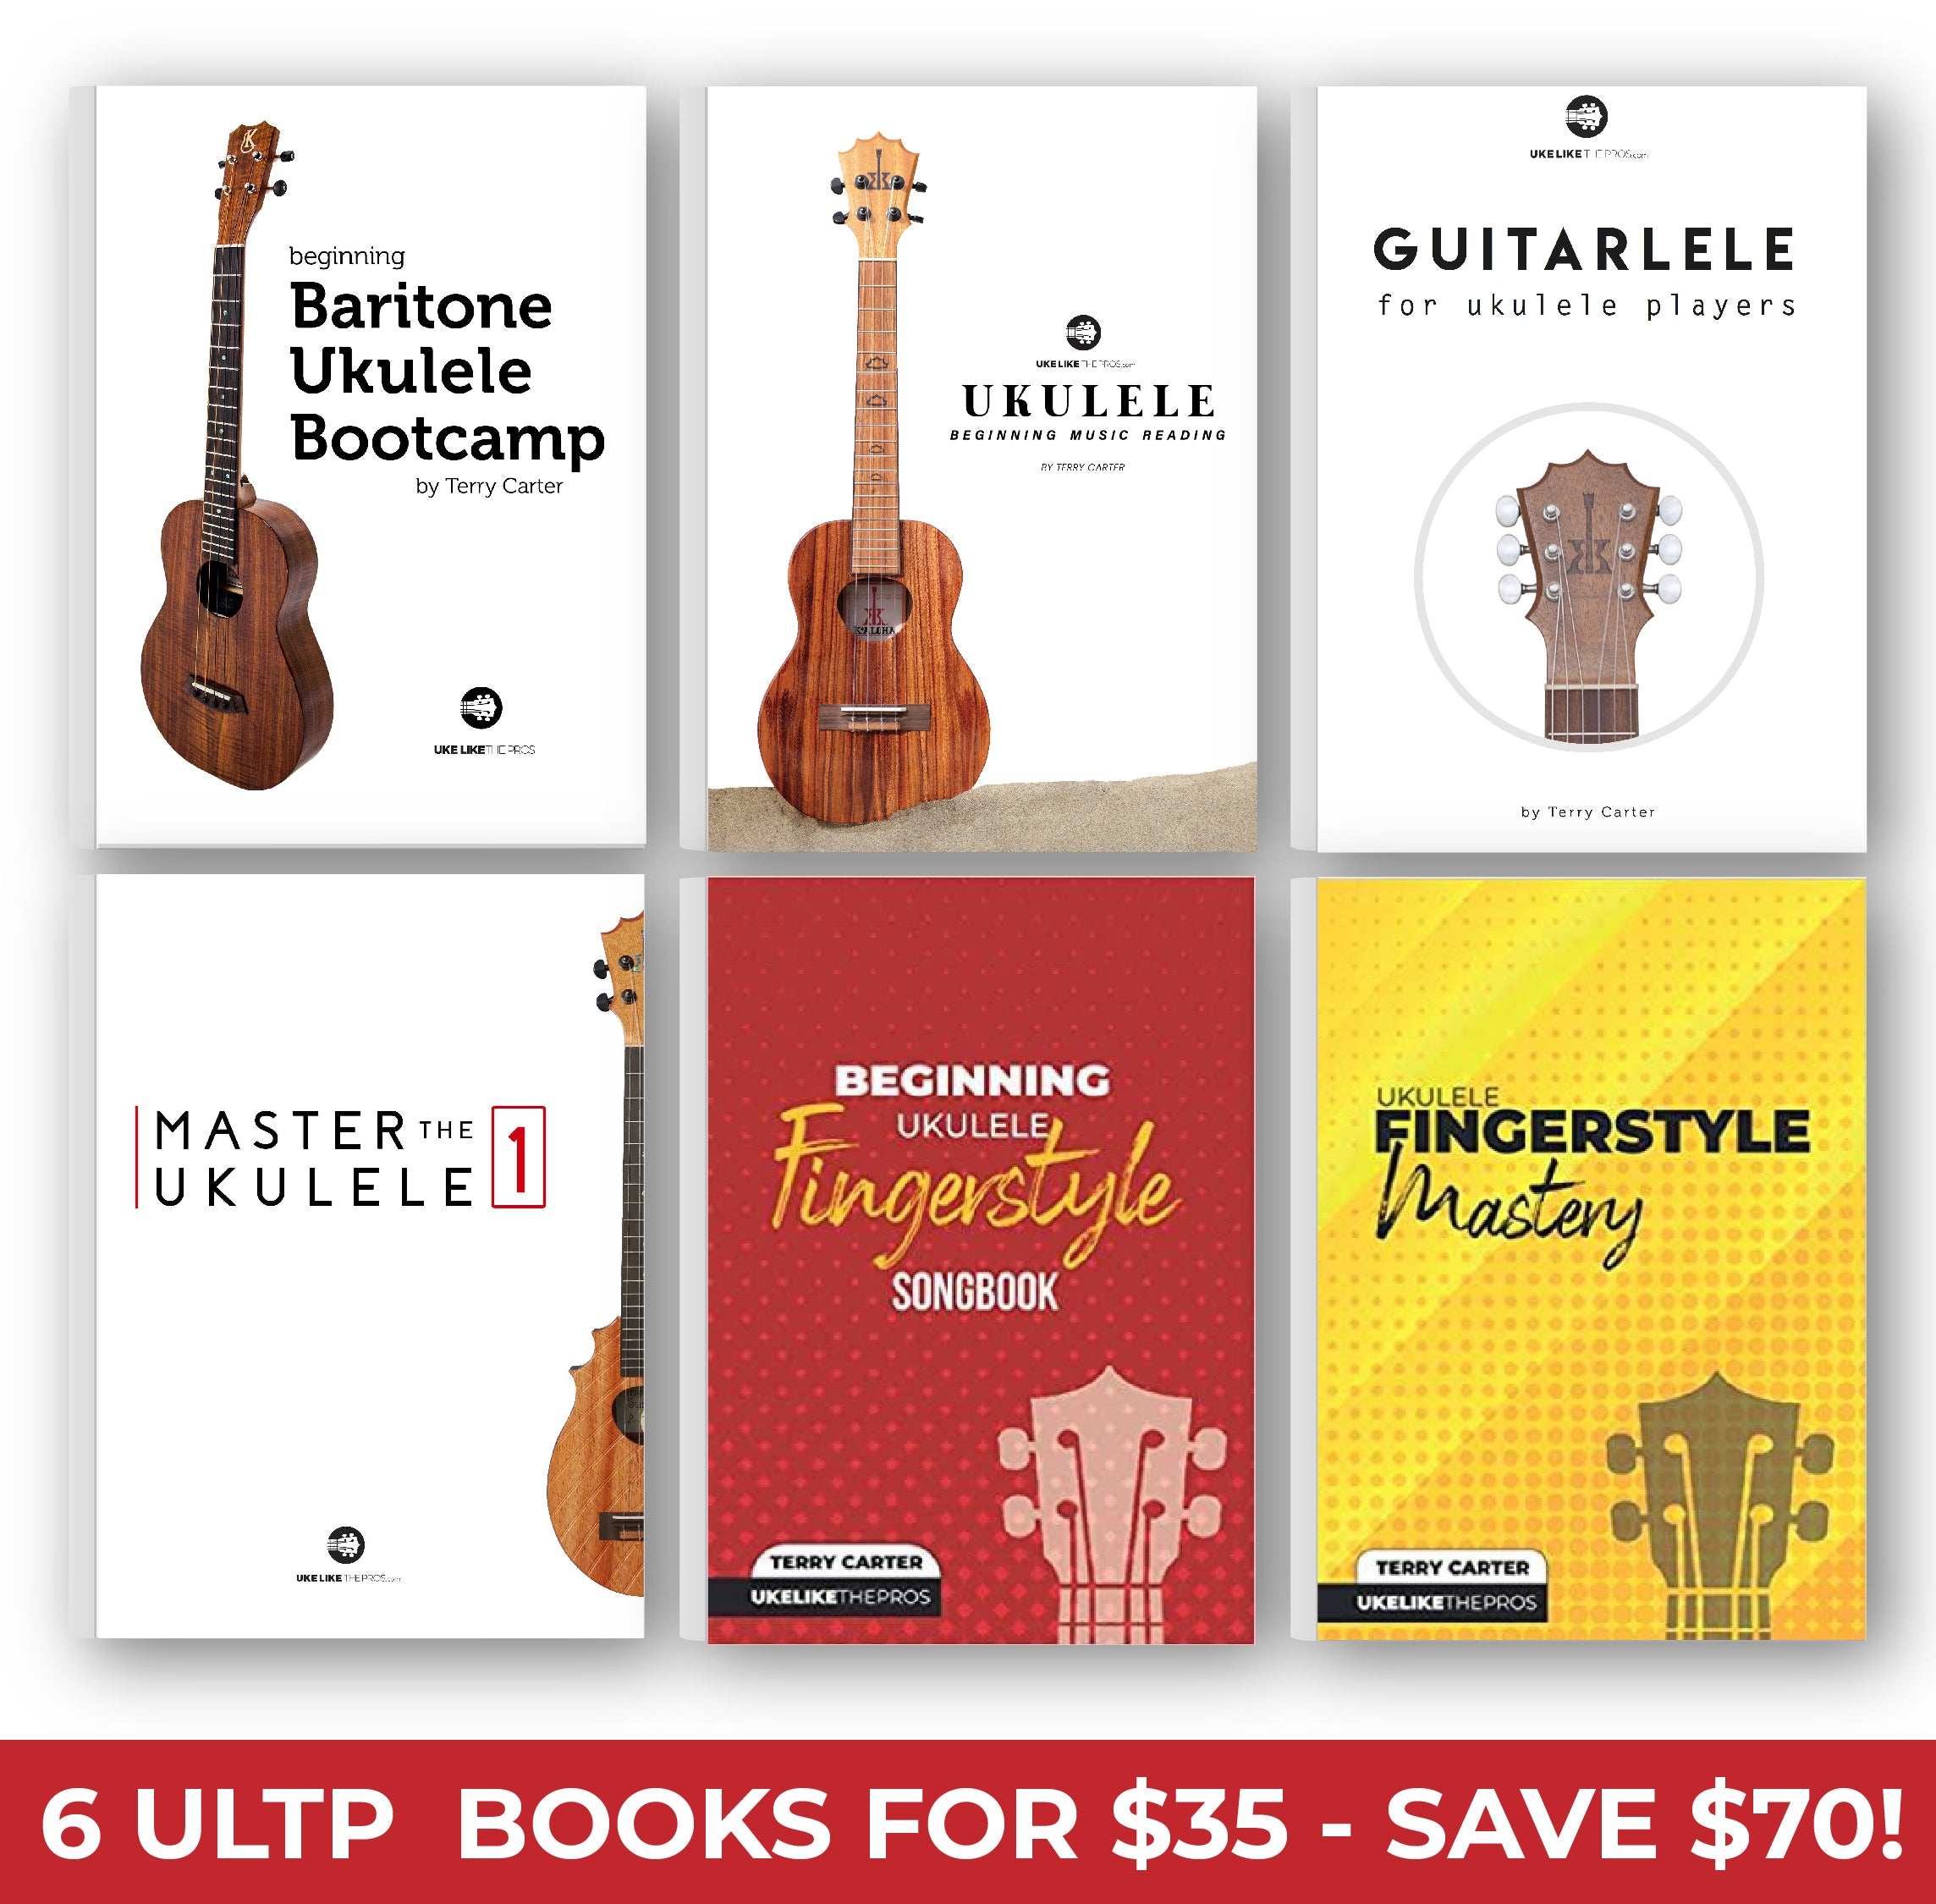 ULTP Books Special Sale  - Buy All 6 Ukulele Books for $35!